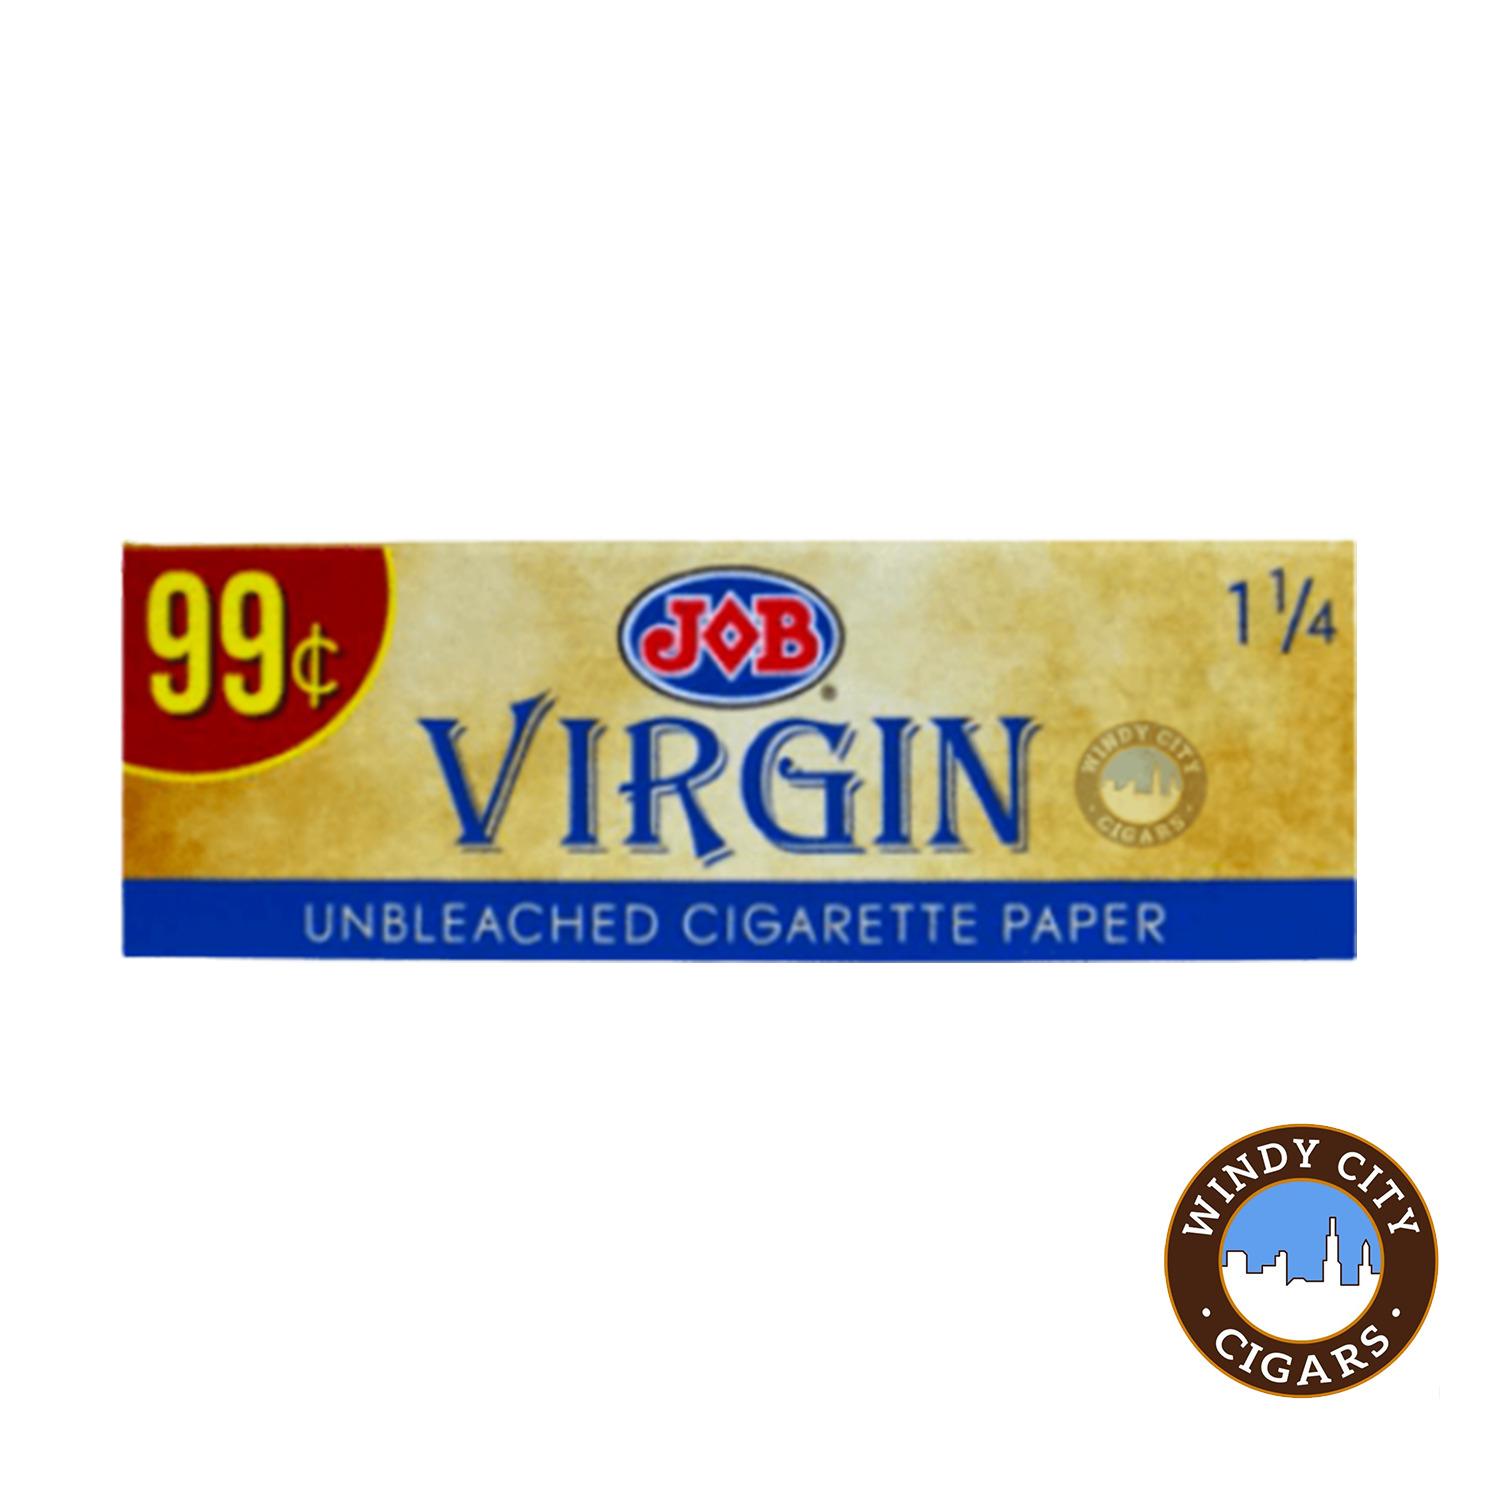 Job Virgin Unbleached 1 1/4 Rolling Papers - 5 Packs